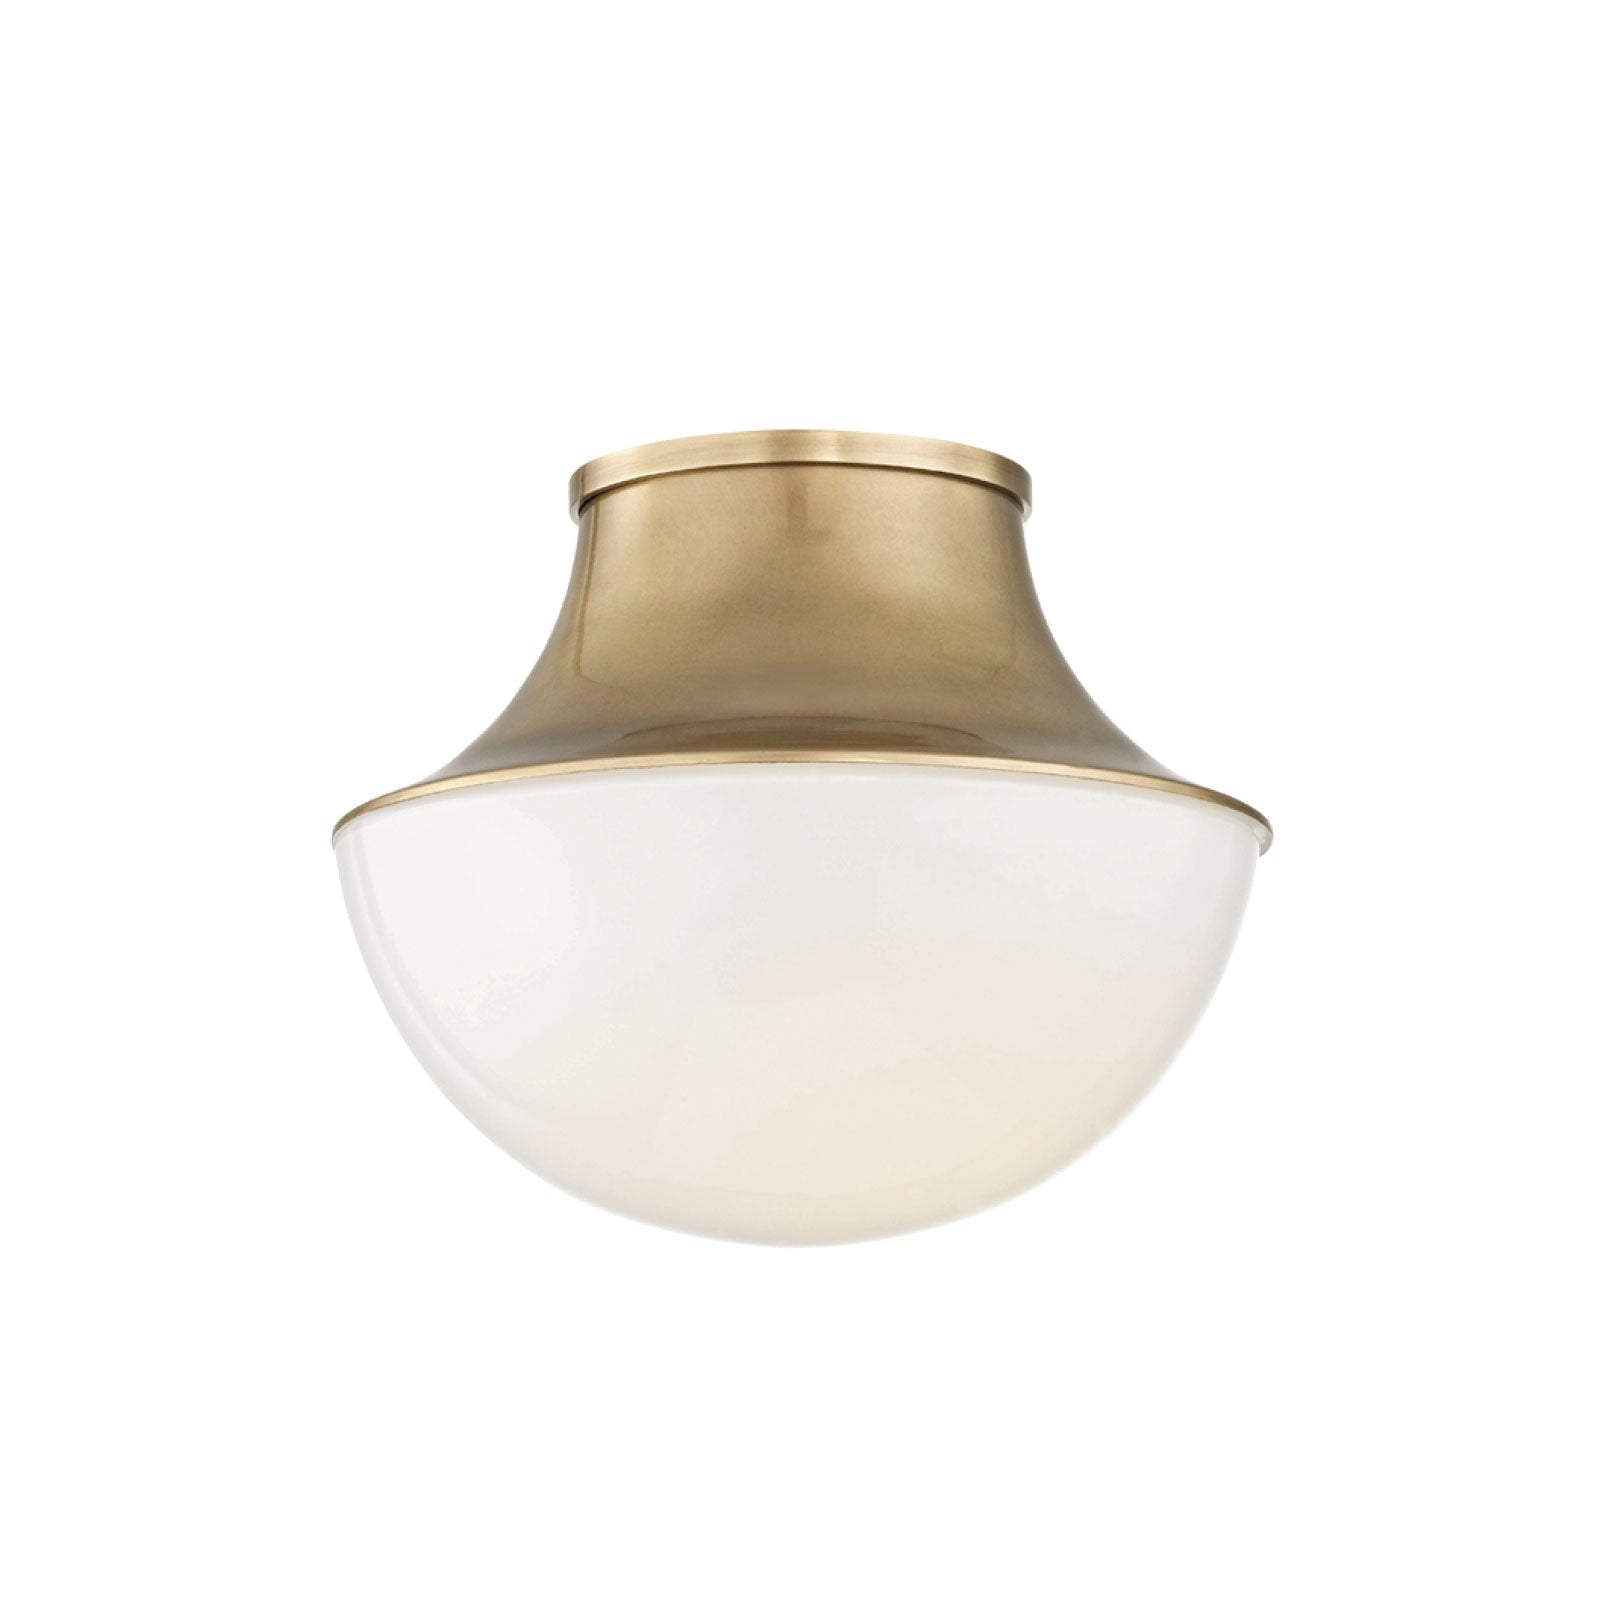 Semi flush brass and frosted glass globe light fixture